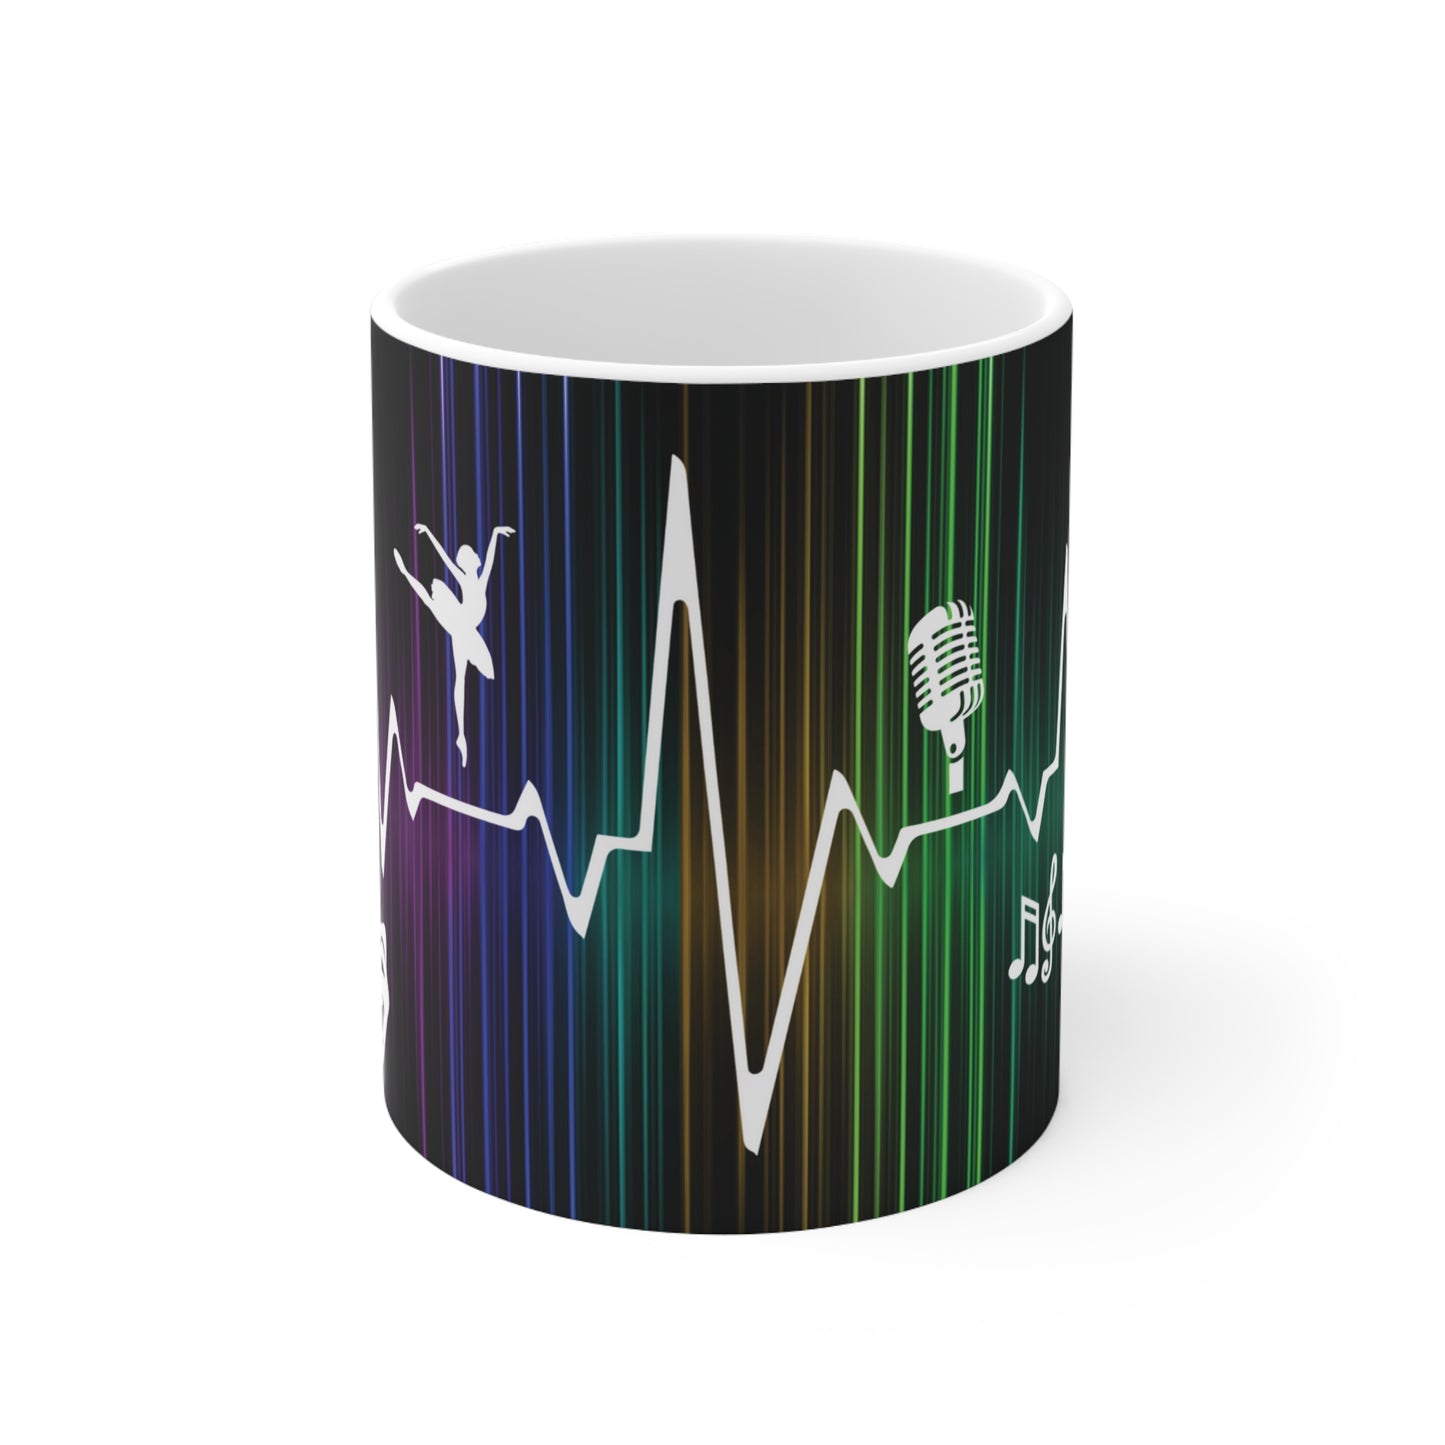 Beating Heart of Entertainment - Shockwave - Ceramic Mug 11oz